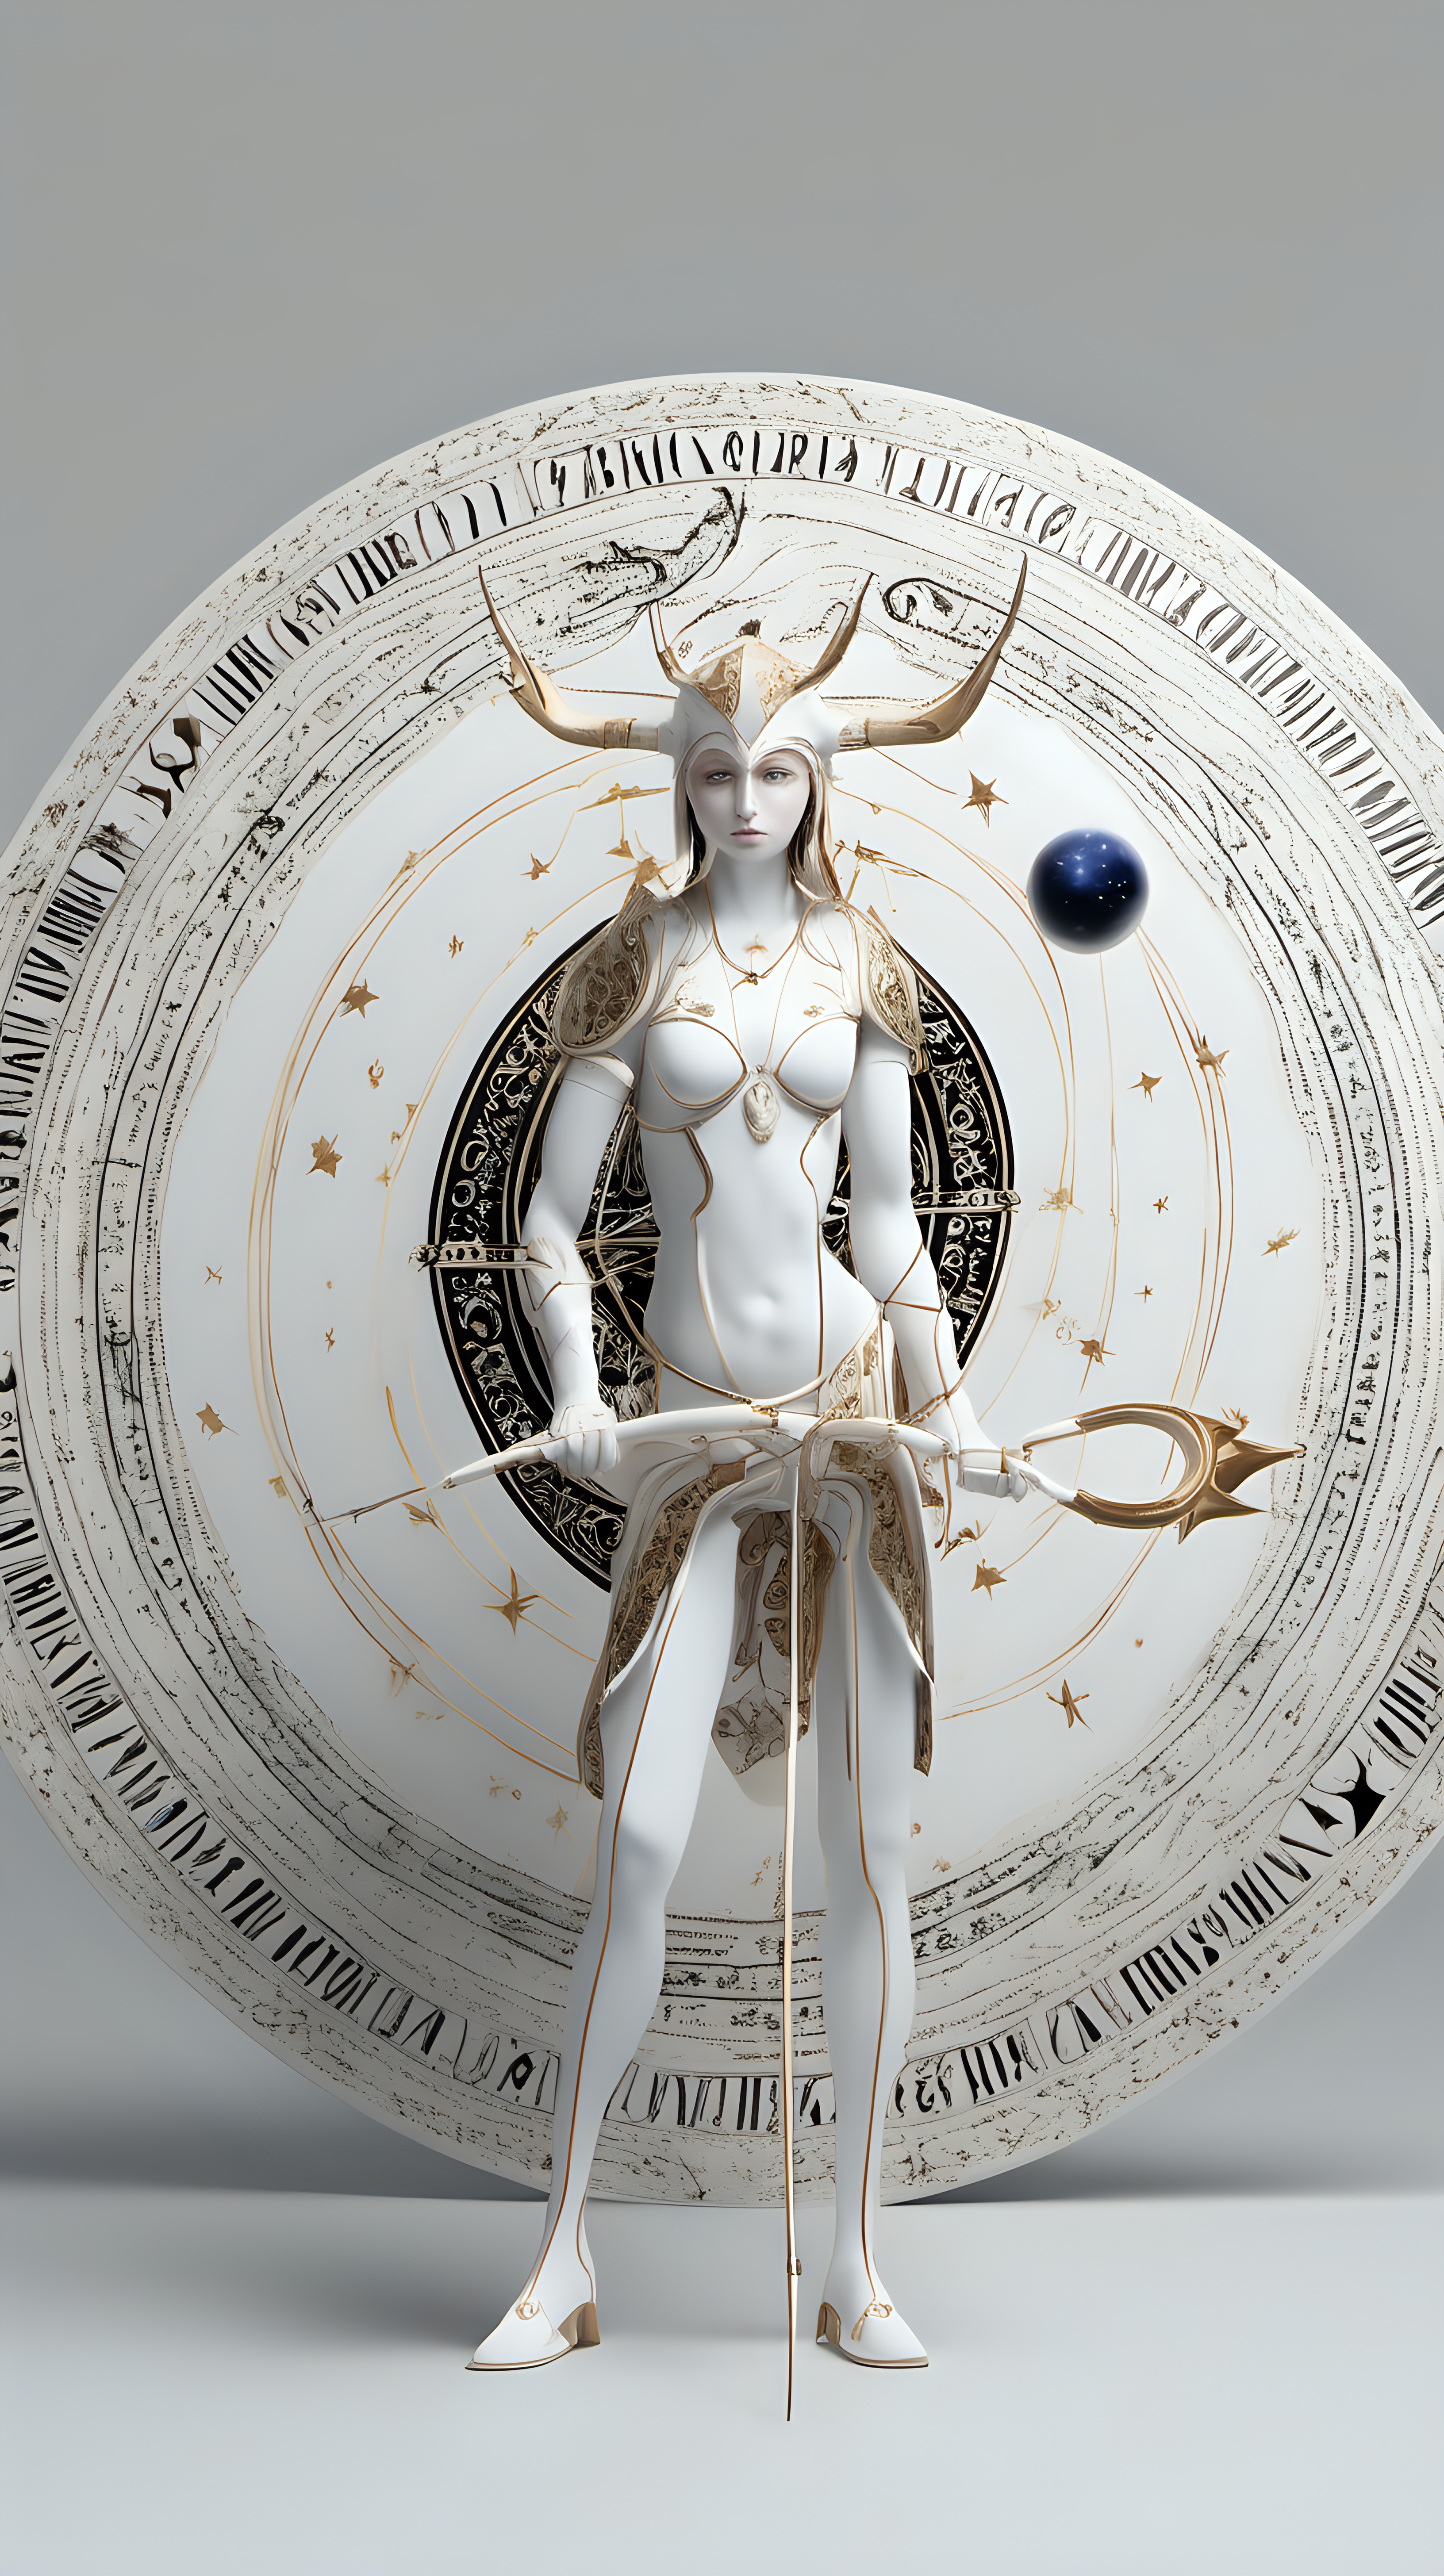 Astrological circle sagittarius archer 3d porcelain render in